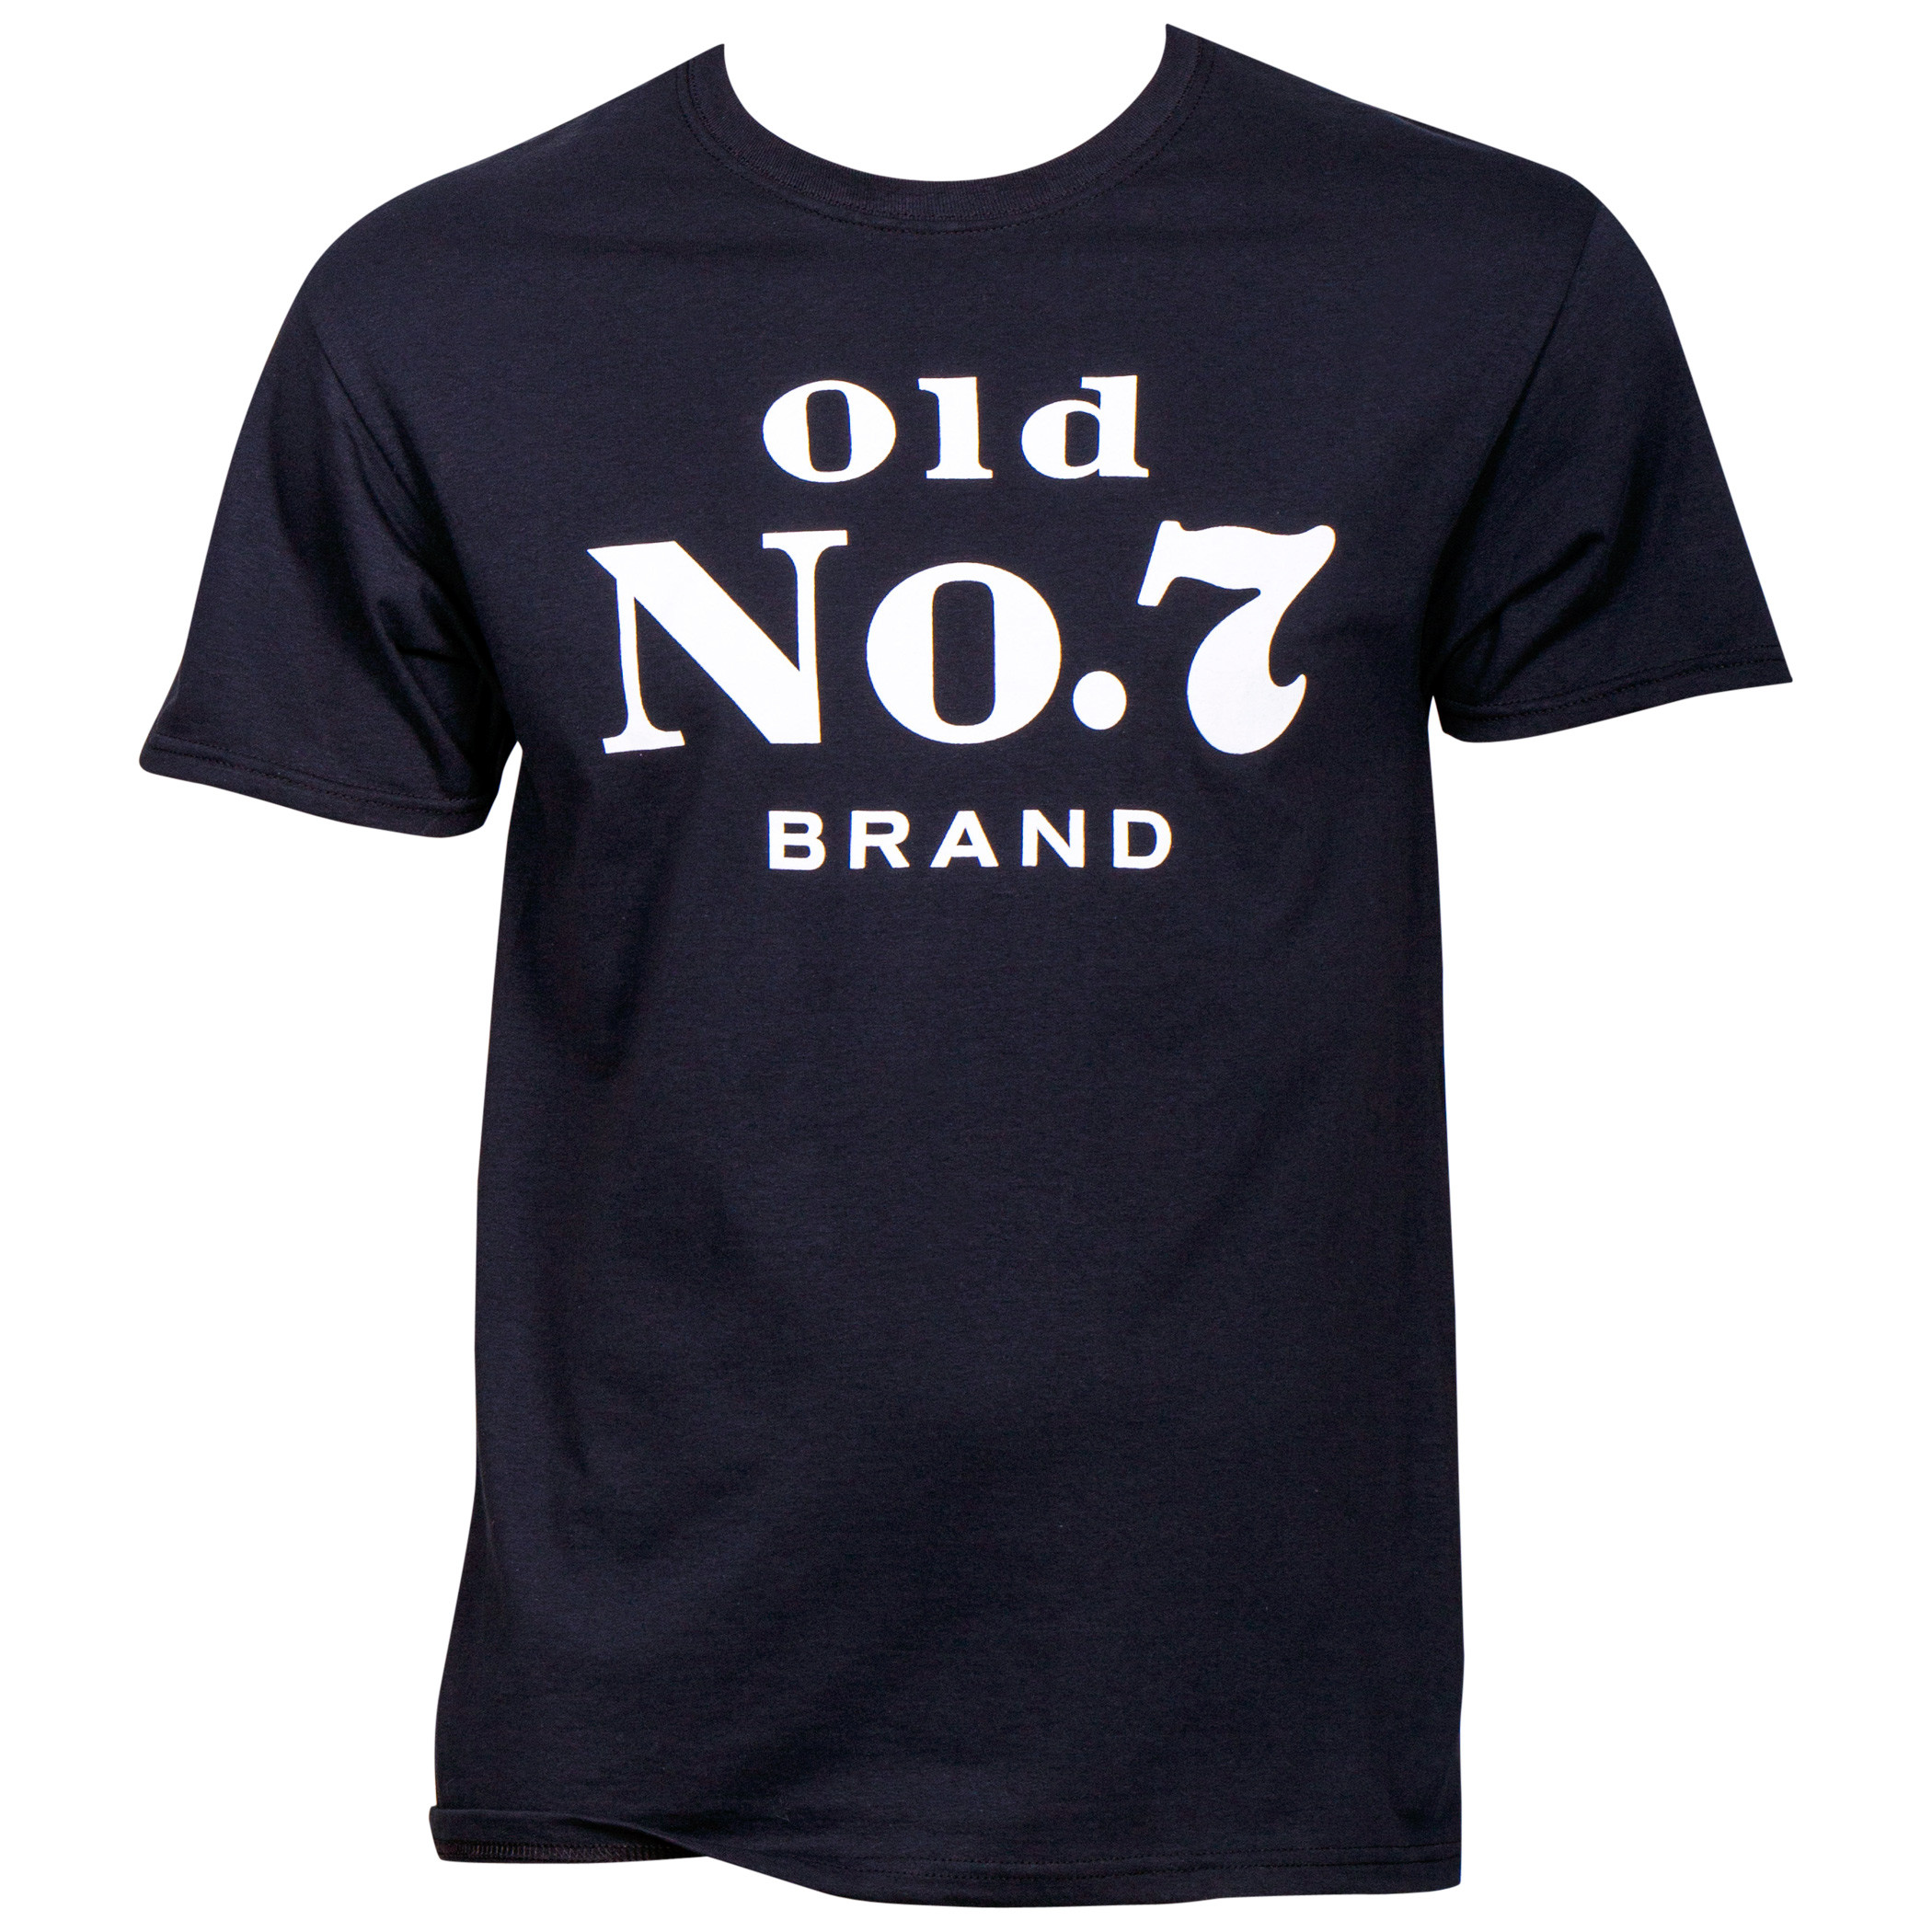 Jack Daniels Old No. 7 Brand Logo T-Shirt